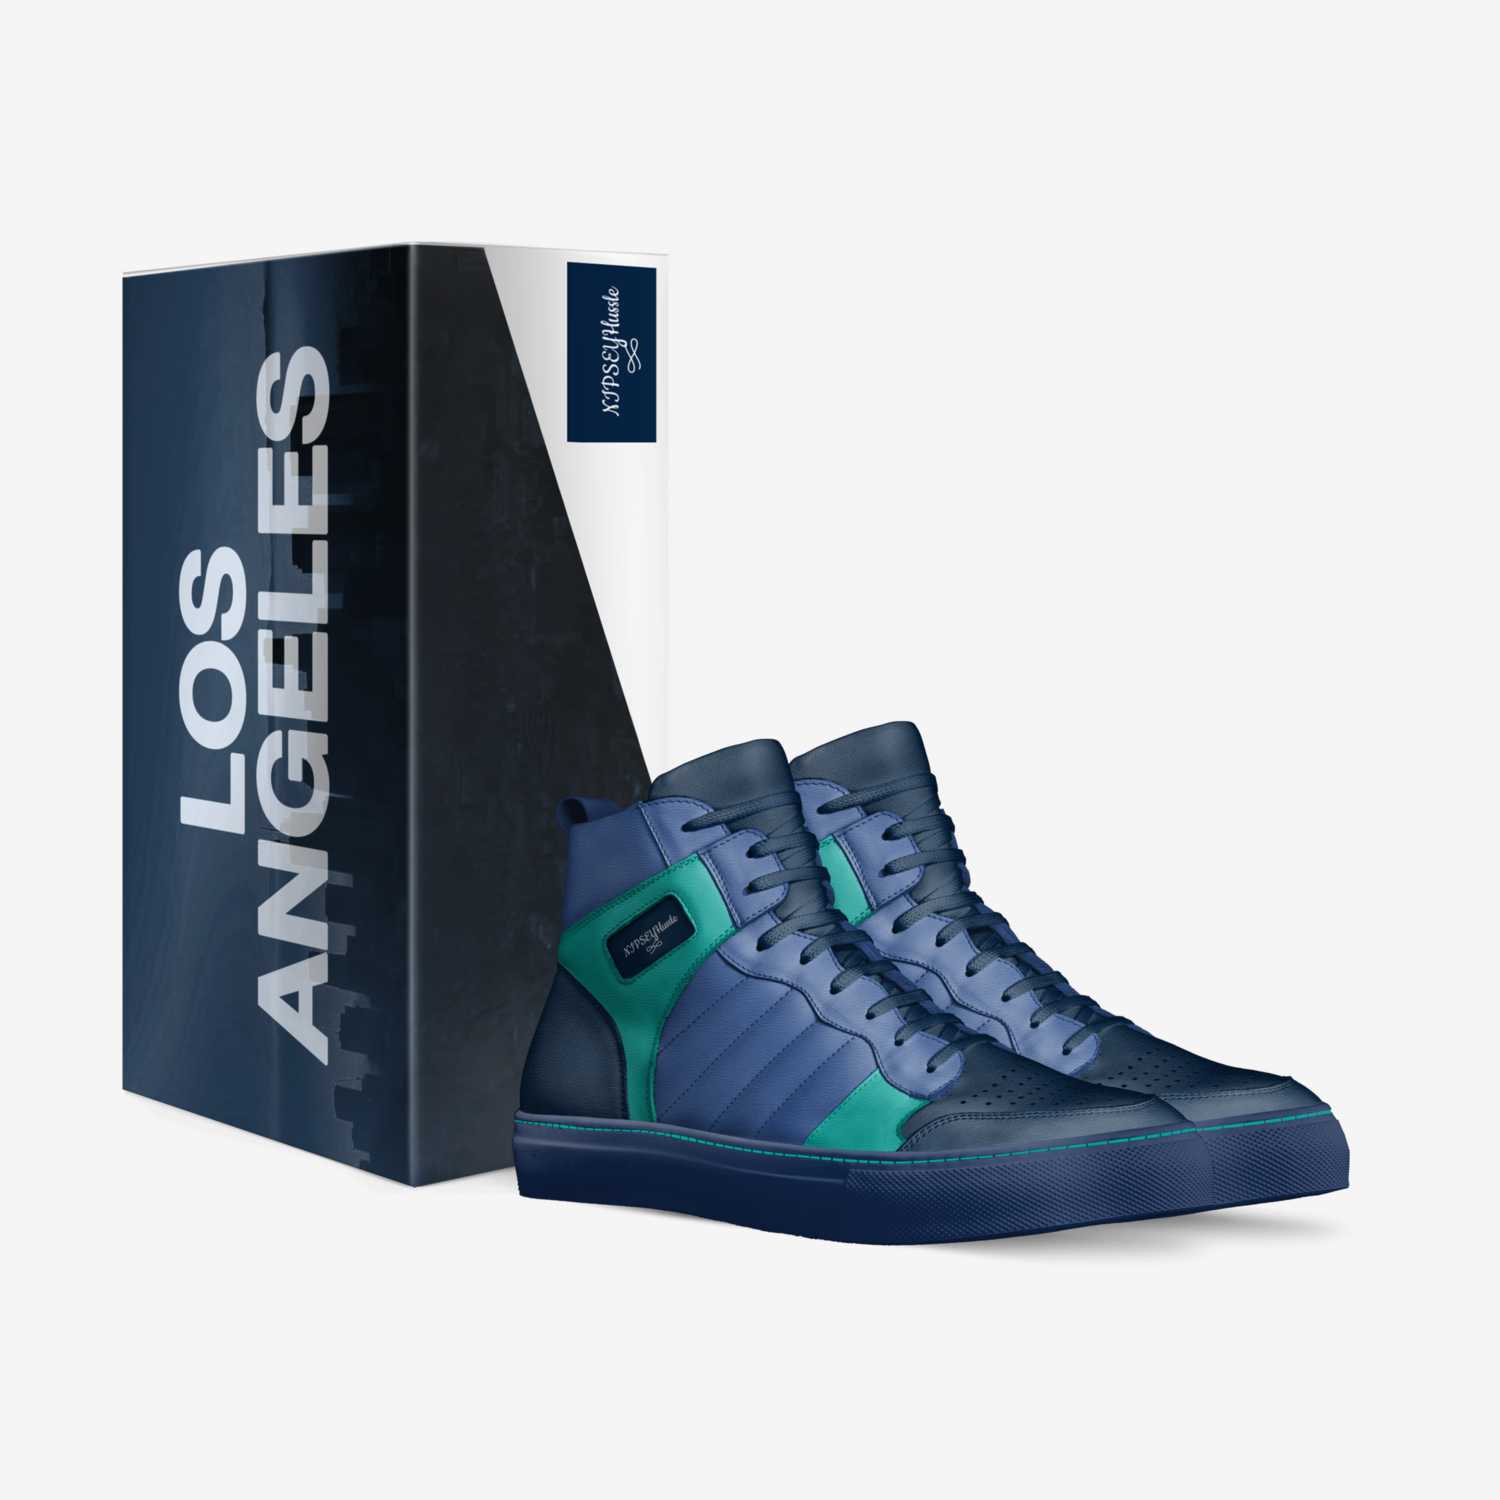  NIPSEYHussle custom made in Italy shoes by Deneanellis Ellis | Box view